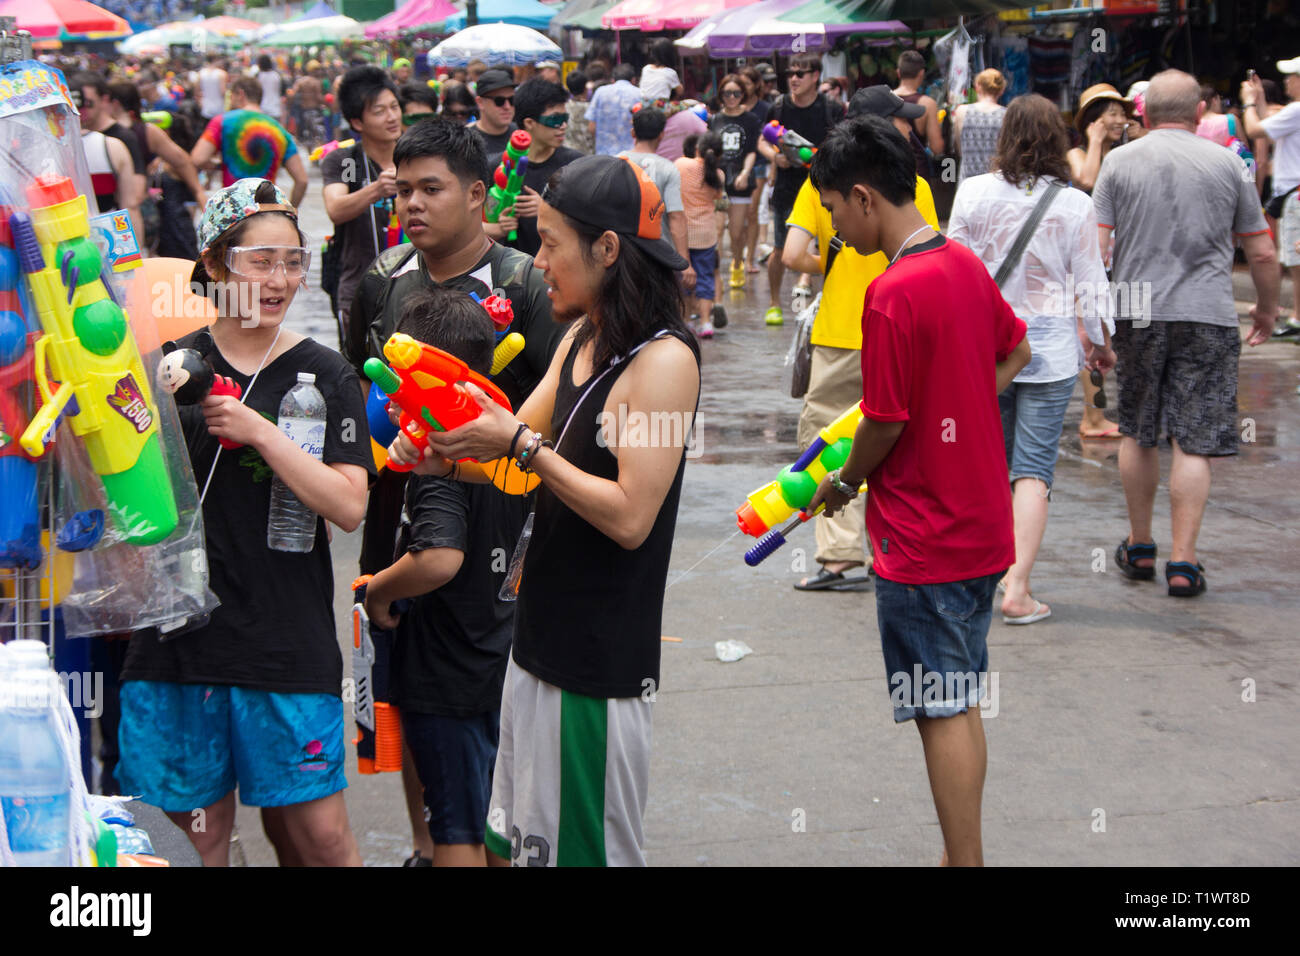 Les adolescents célébrant le nouvel an Thaï de Songkran à Khaosan Road, Bangkok Thaïlande Banque D'Images